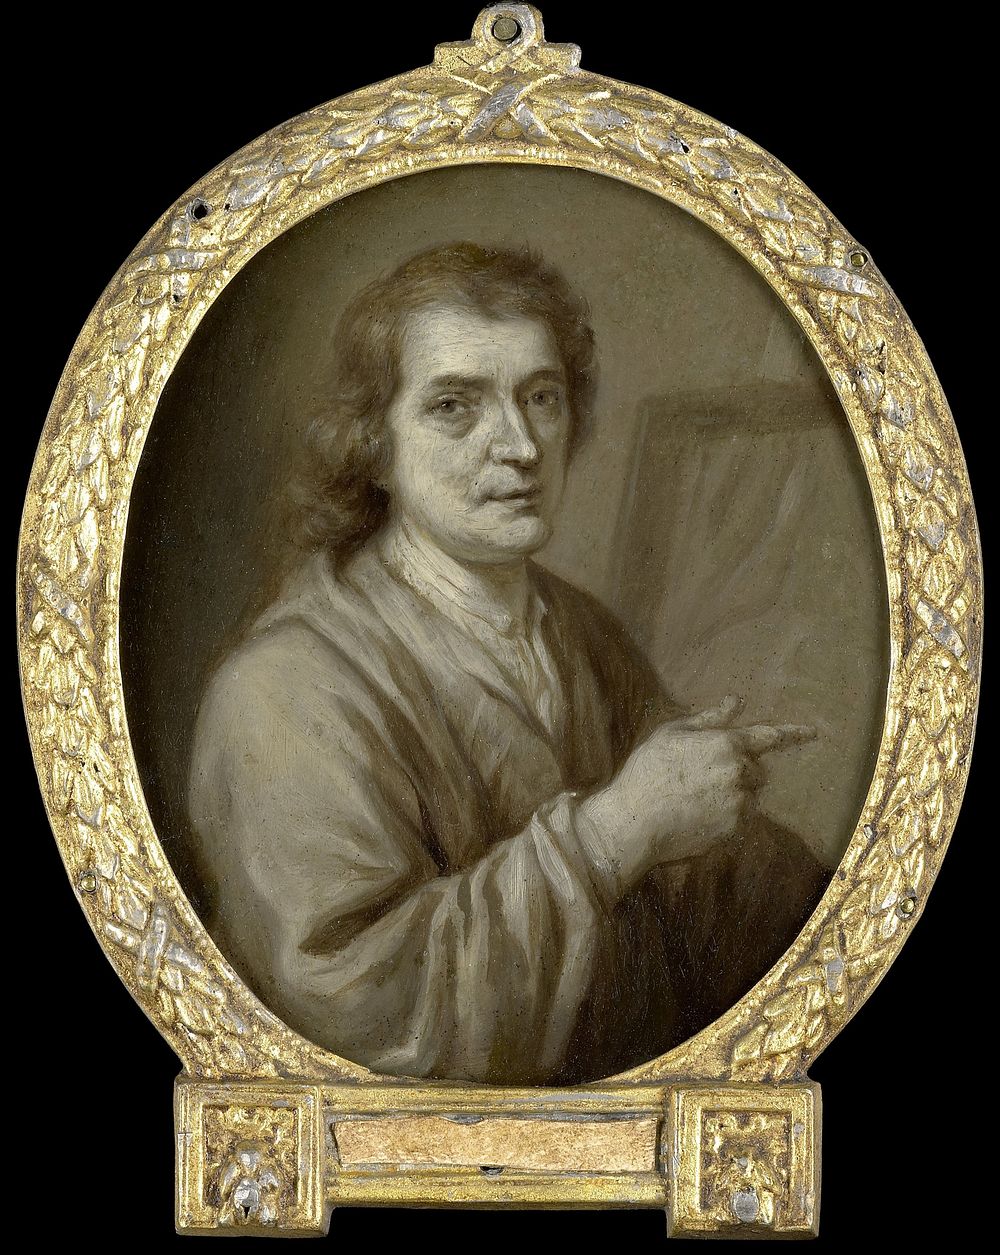 Portrait of Joost van Geel, Painter and Poet in Rotterdam (1732 - 1771) by Jan Maurits Quinkhard and Jacob Houbraken